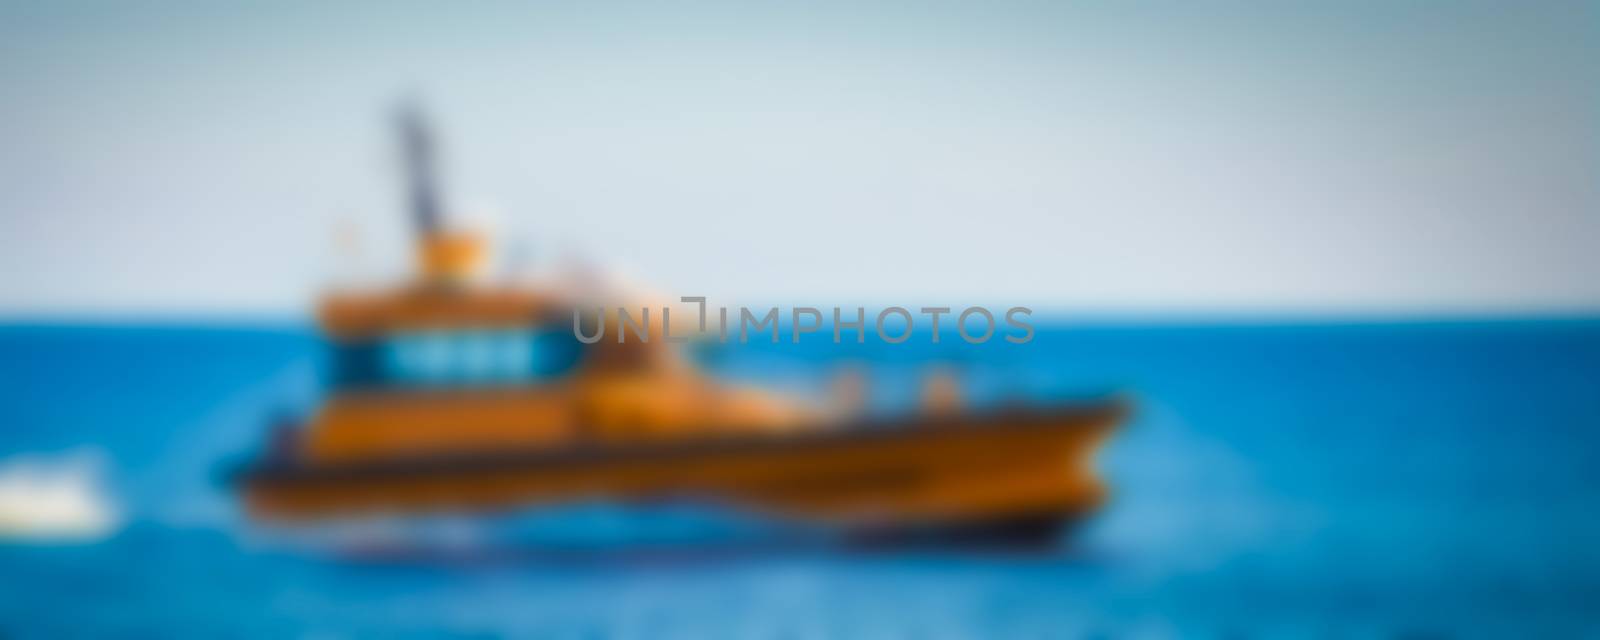 Rescue ship - soft lens bokeh image. Defocused background